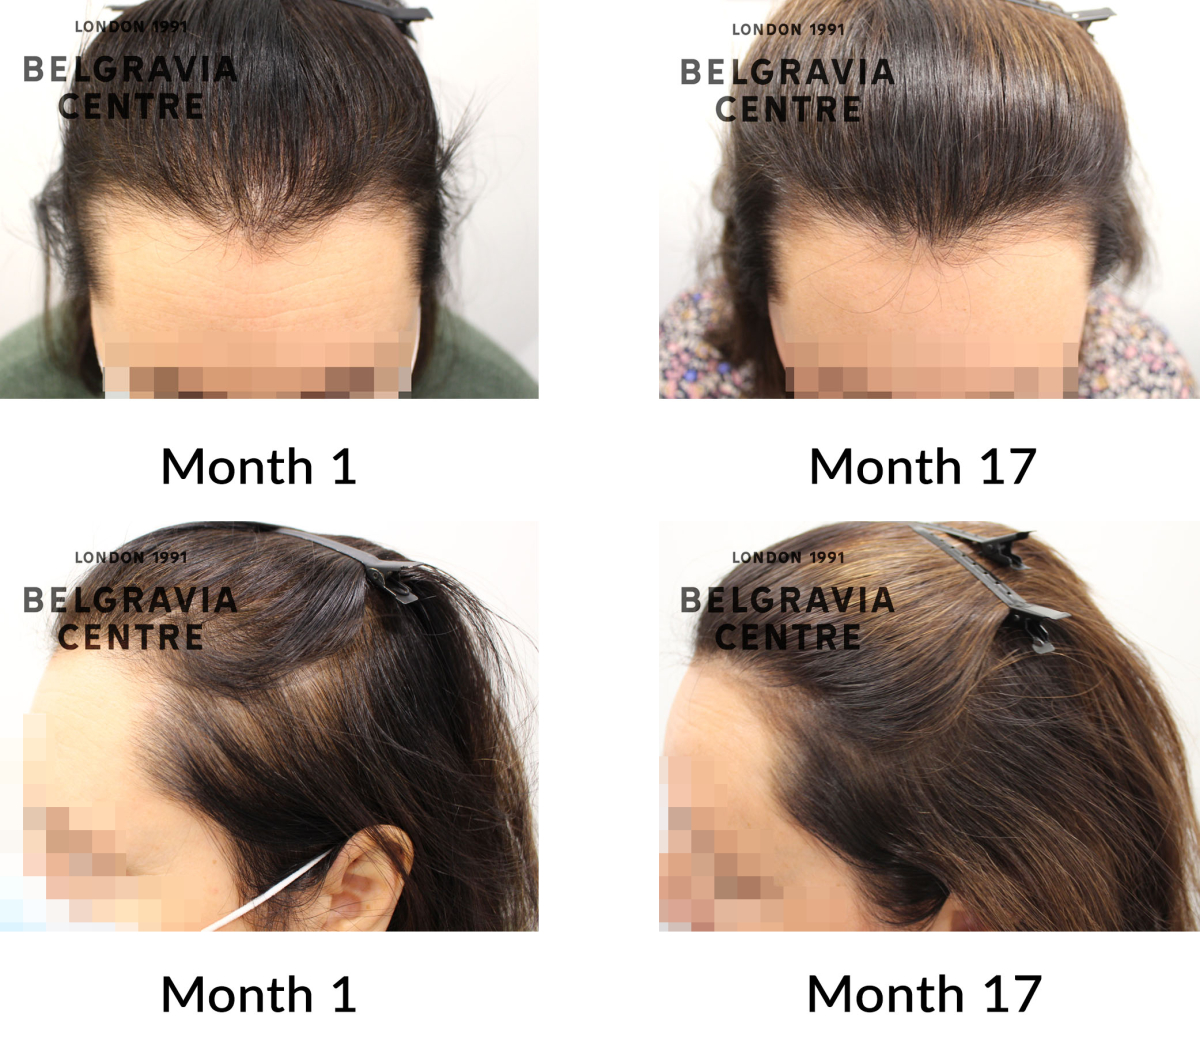 female pattern hair loss the belgravia centre 435923